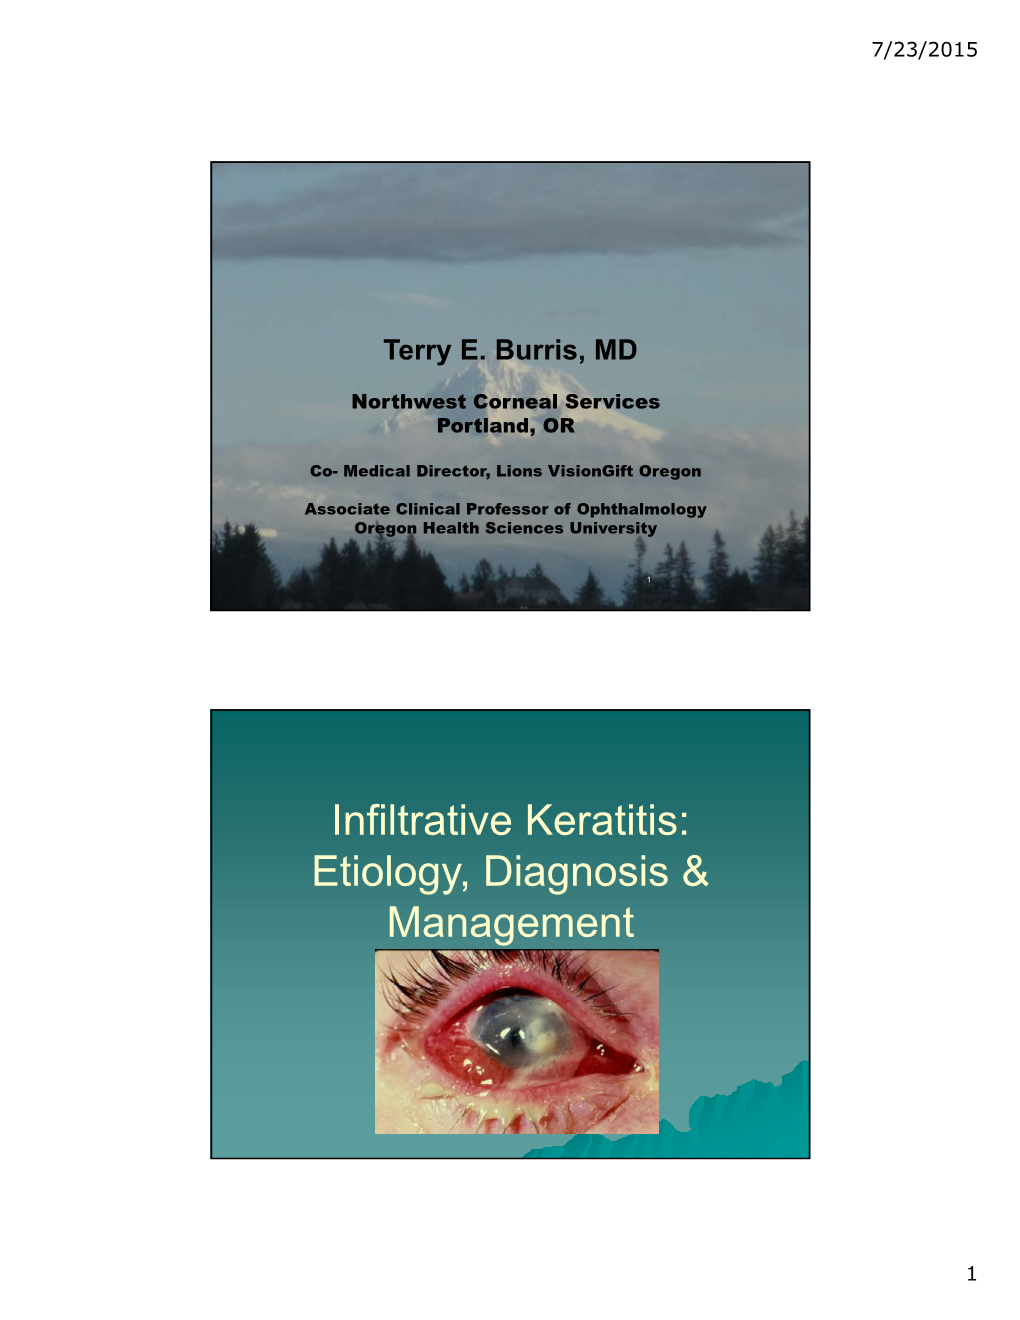 Infiltrative Keratitis: Etiology, Diagnosis & Management